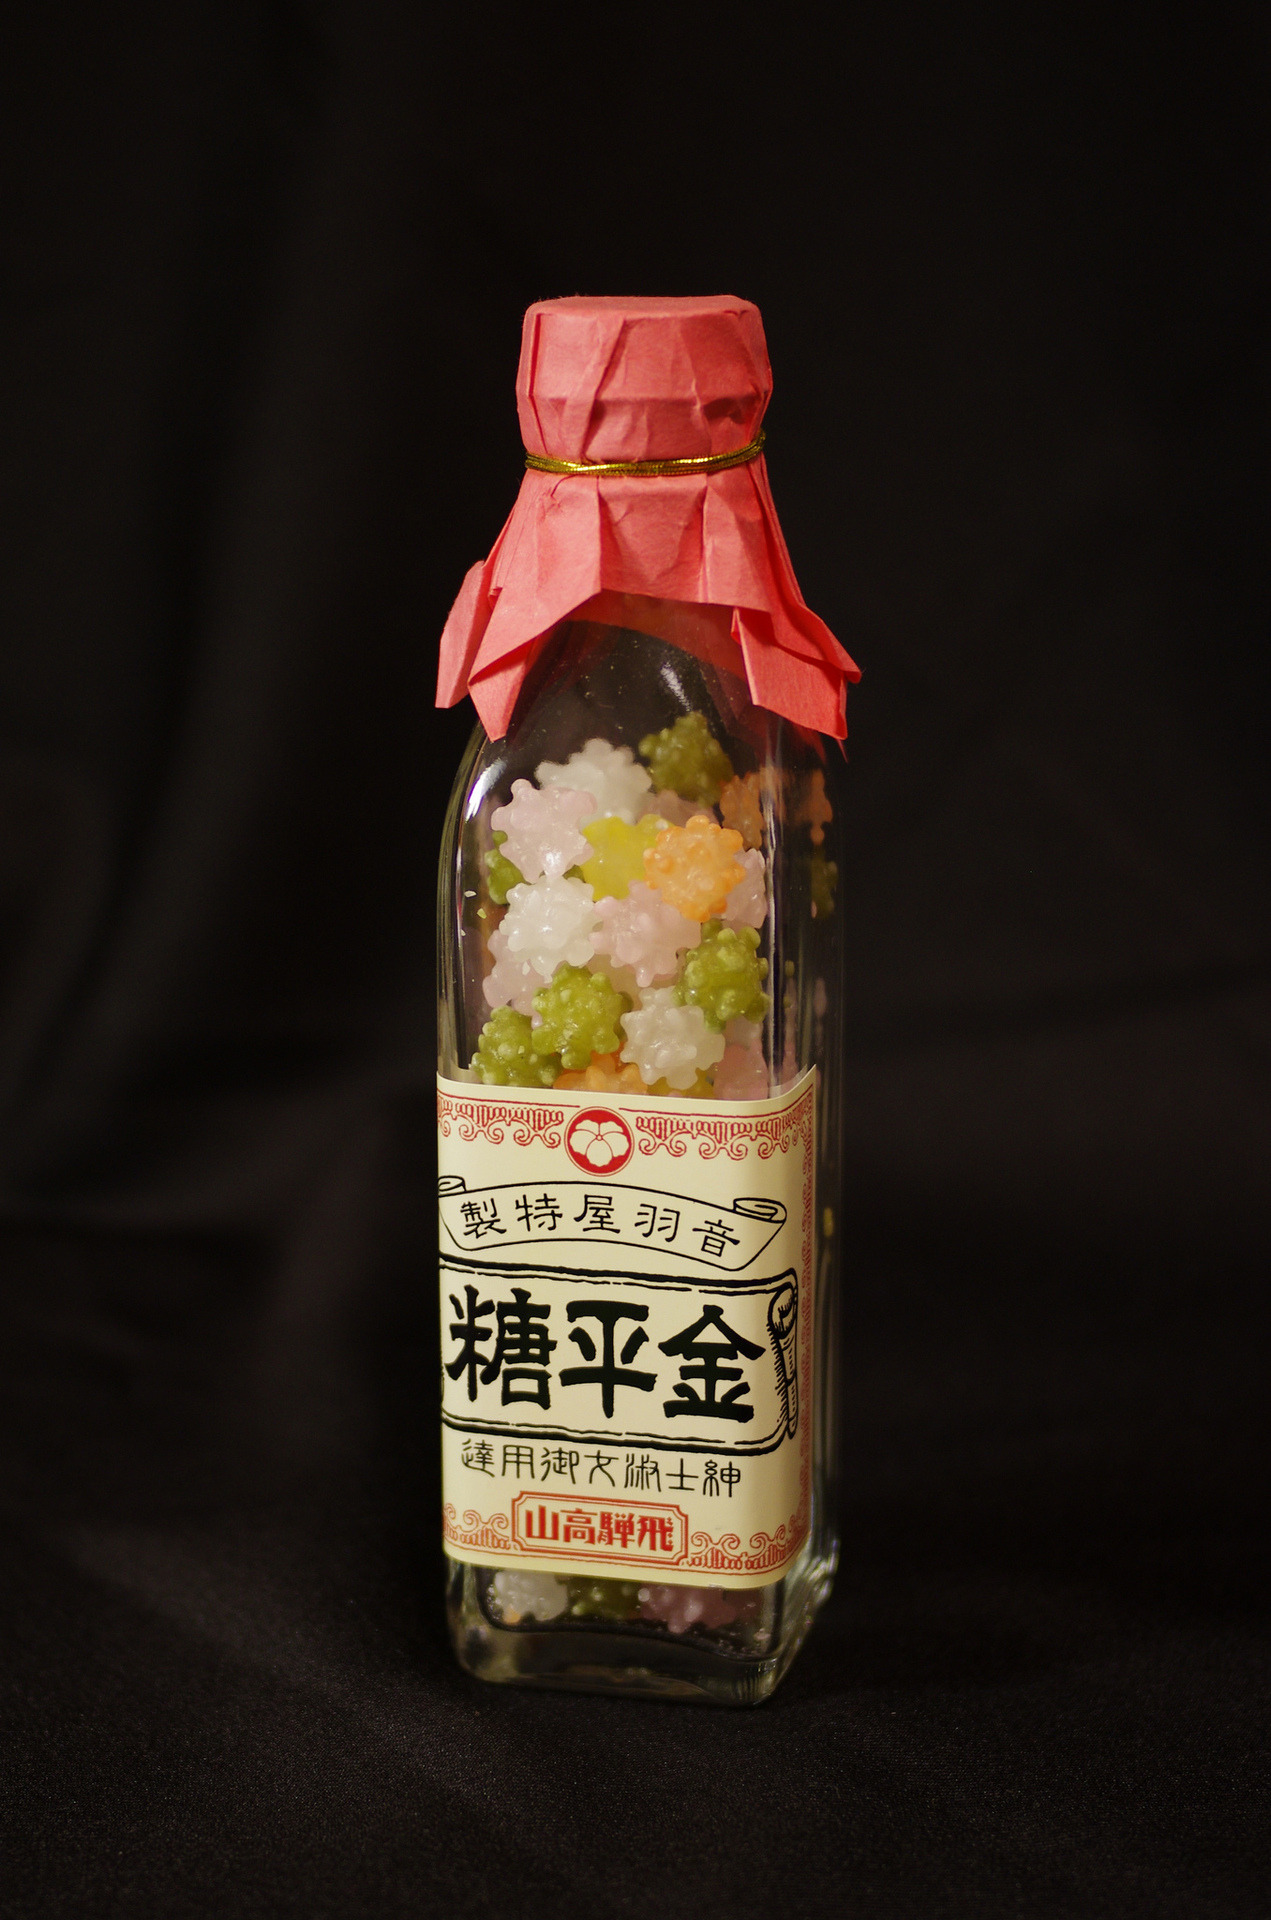 dontrblgme:
“ souvenirs ; Japanese candy (via Yoozigen)
”